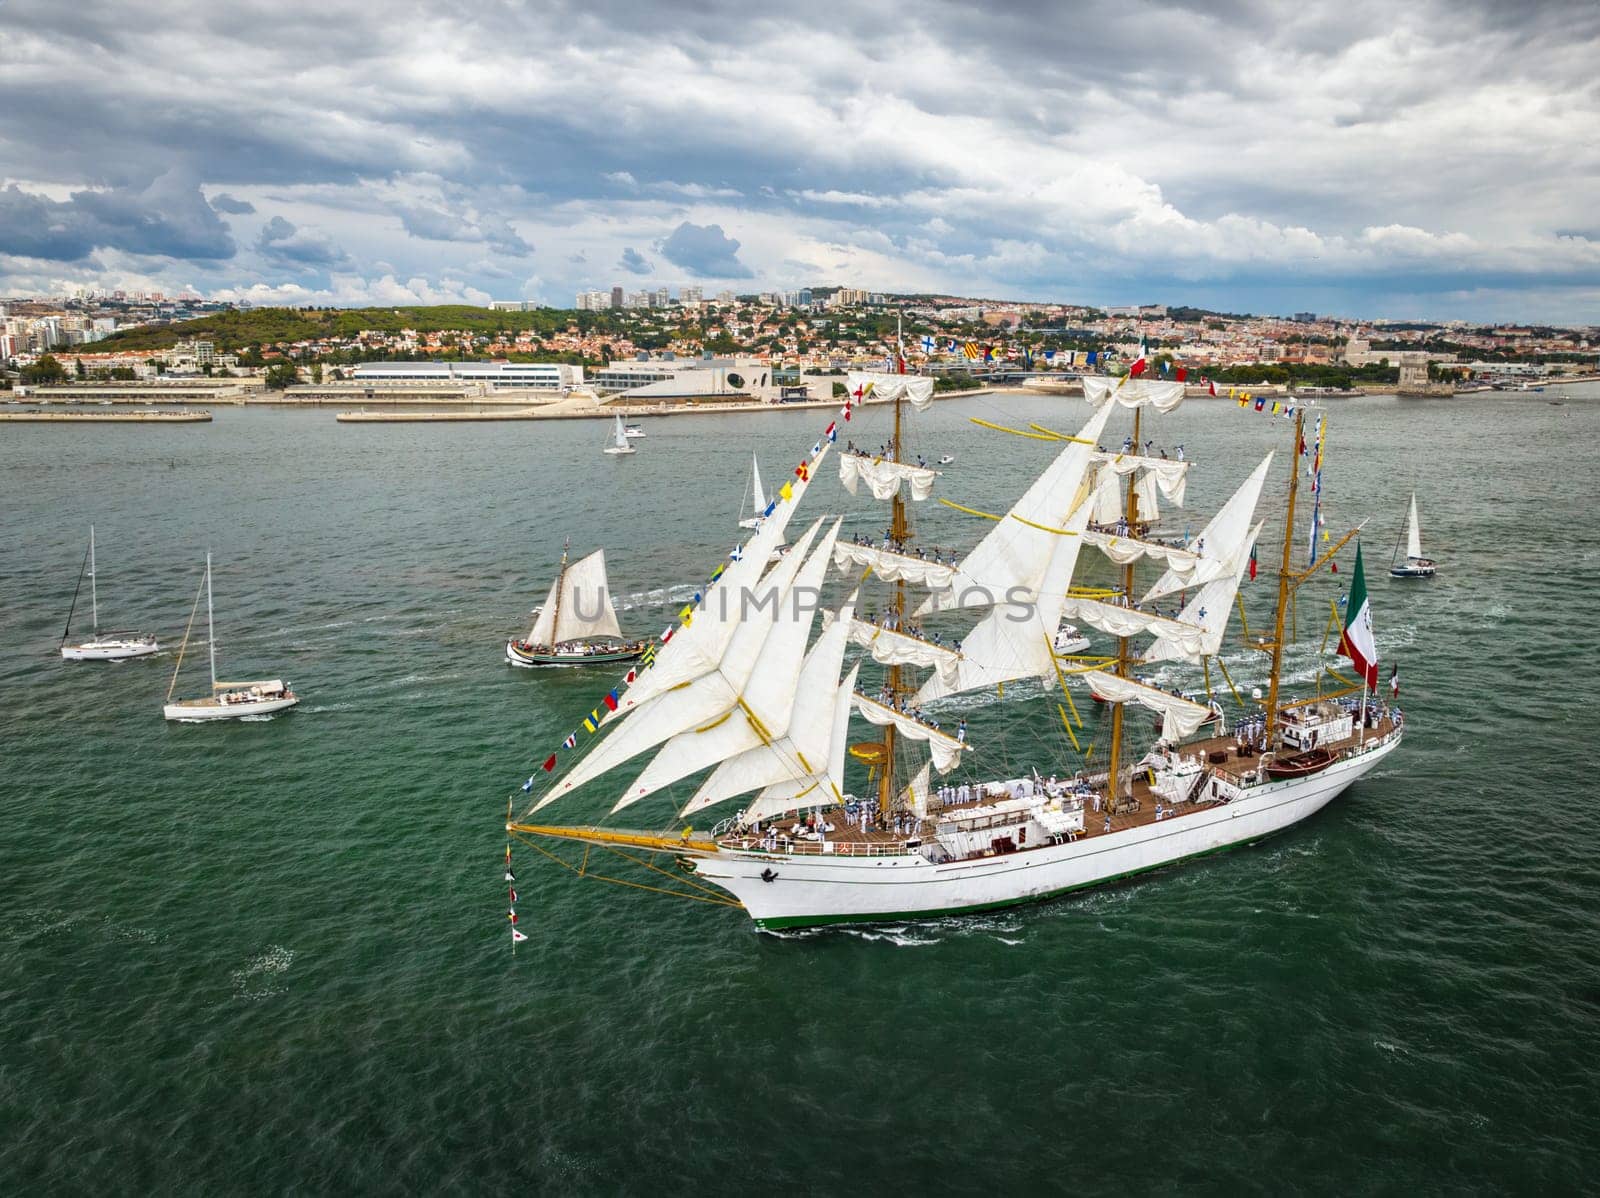 Tall ships sailing in Tagus river. Lisbon, Portugal by dimol